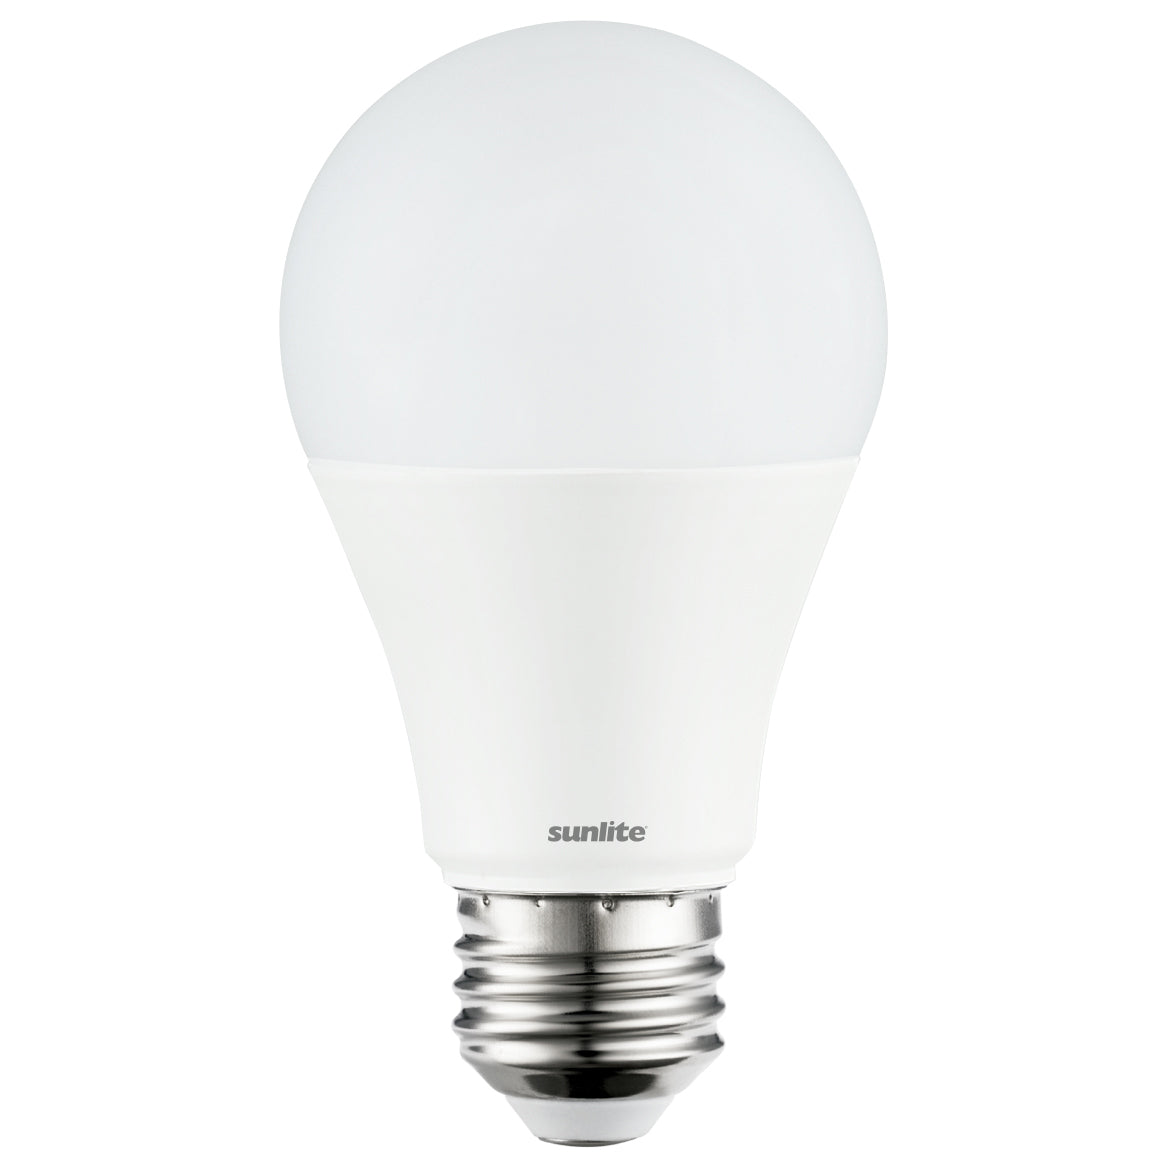 Sunlite 80792 LED A19 Standard Household Light Bulb, 9 Watts (60W Equivalent), 800 Lumens, Medium Base (E26), Dimmable, UL Listed, Energy Star, 90 CRI, Title 20, 2700K Warm White, 1 Count